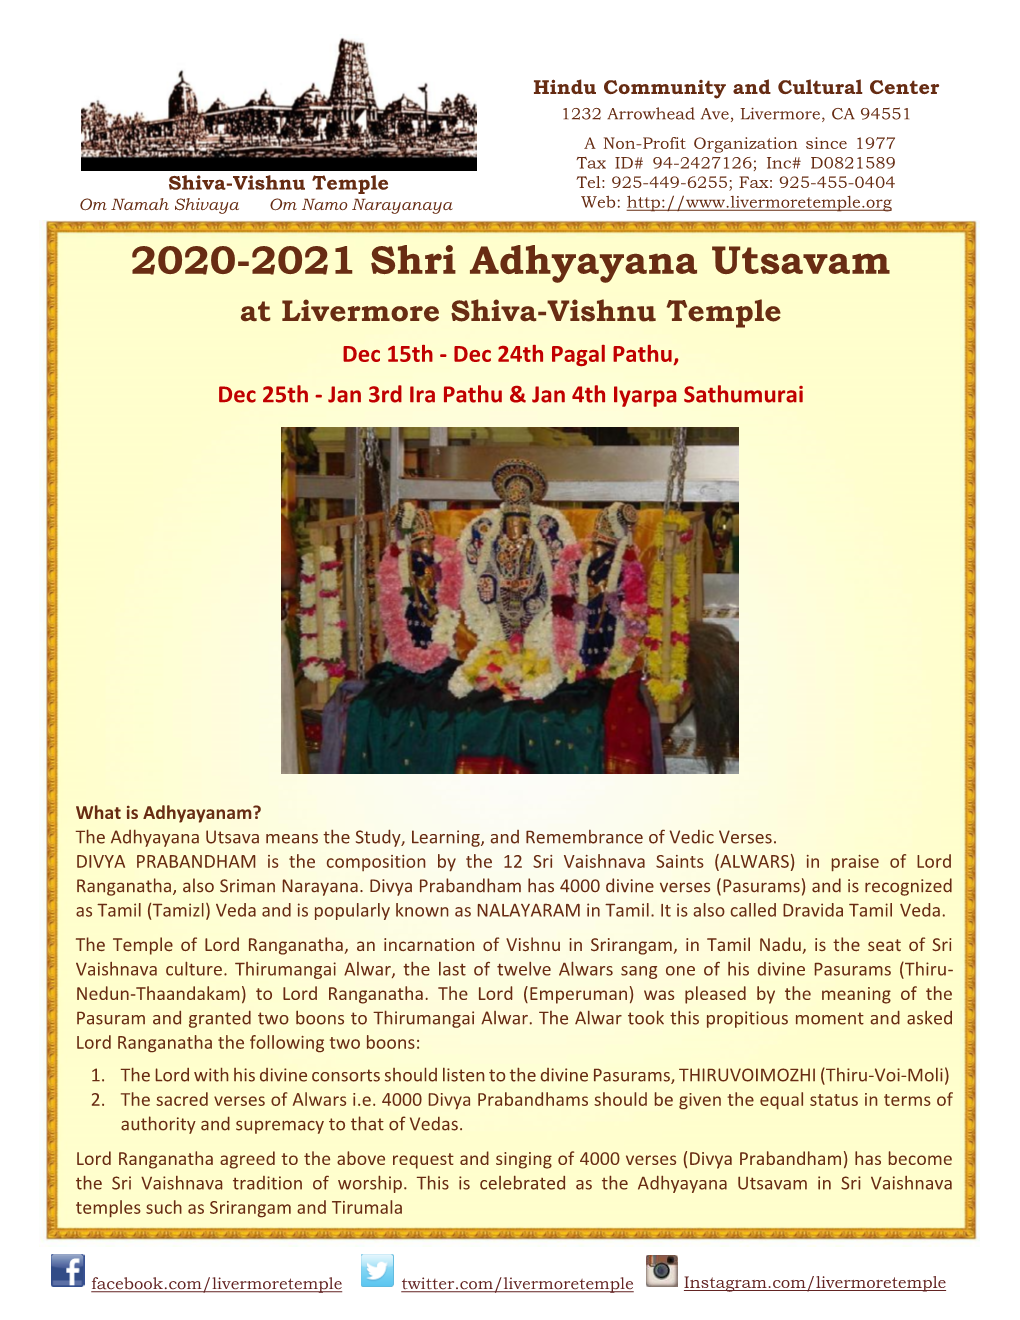 2020-2021 Shri Adhyayana Utsavam at Livermore Shiva-Vishnu Temple Dec 15Th - Dec 24Th Pagal Pathu, Dec 25Th - Jan 3Rd Ira Pathu & Jan 4Th Iyarpa Sathumurai